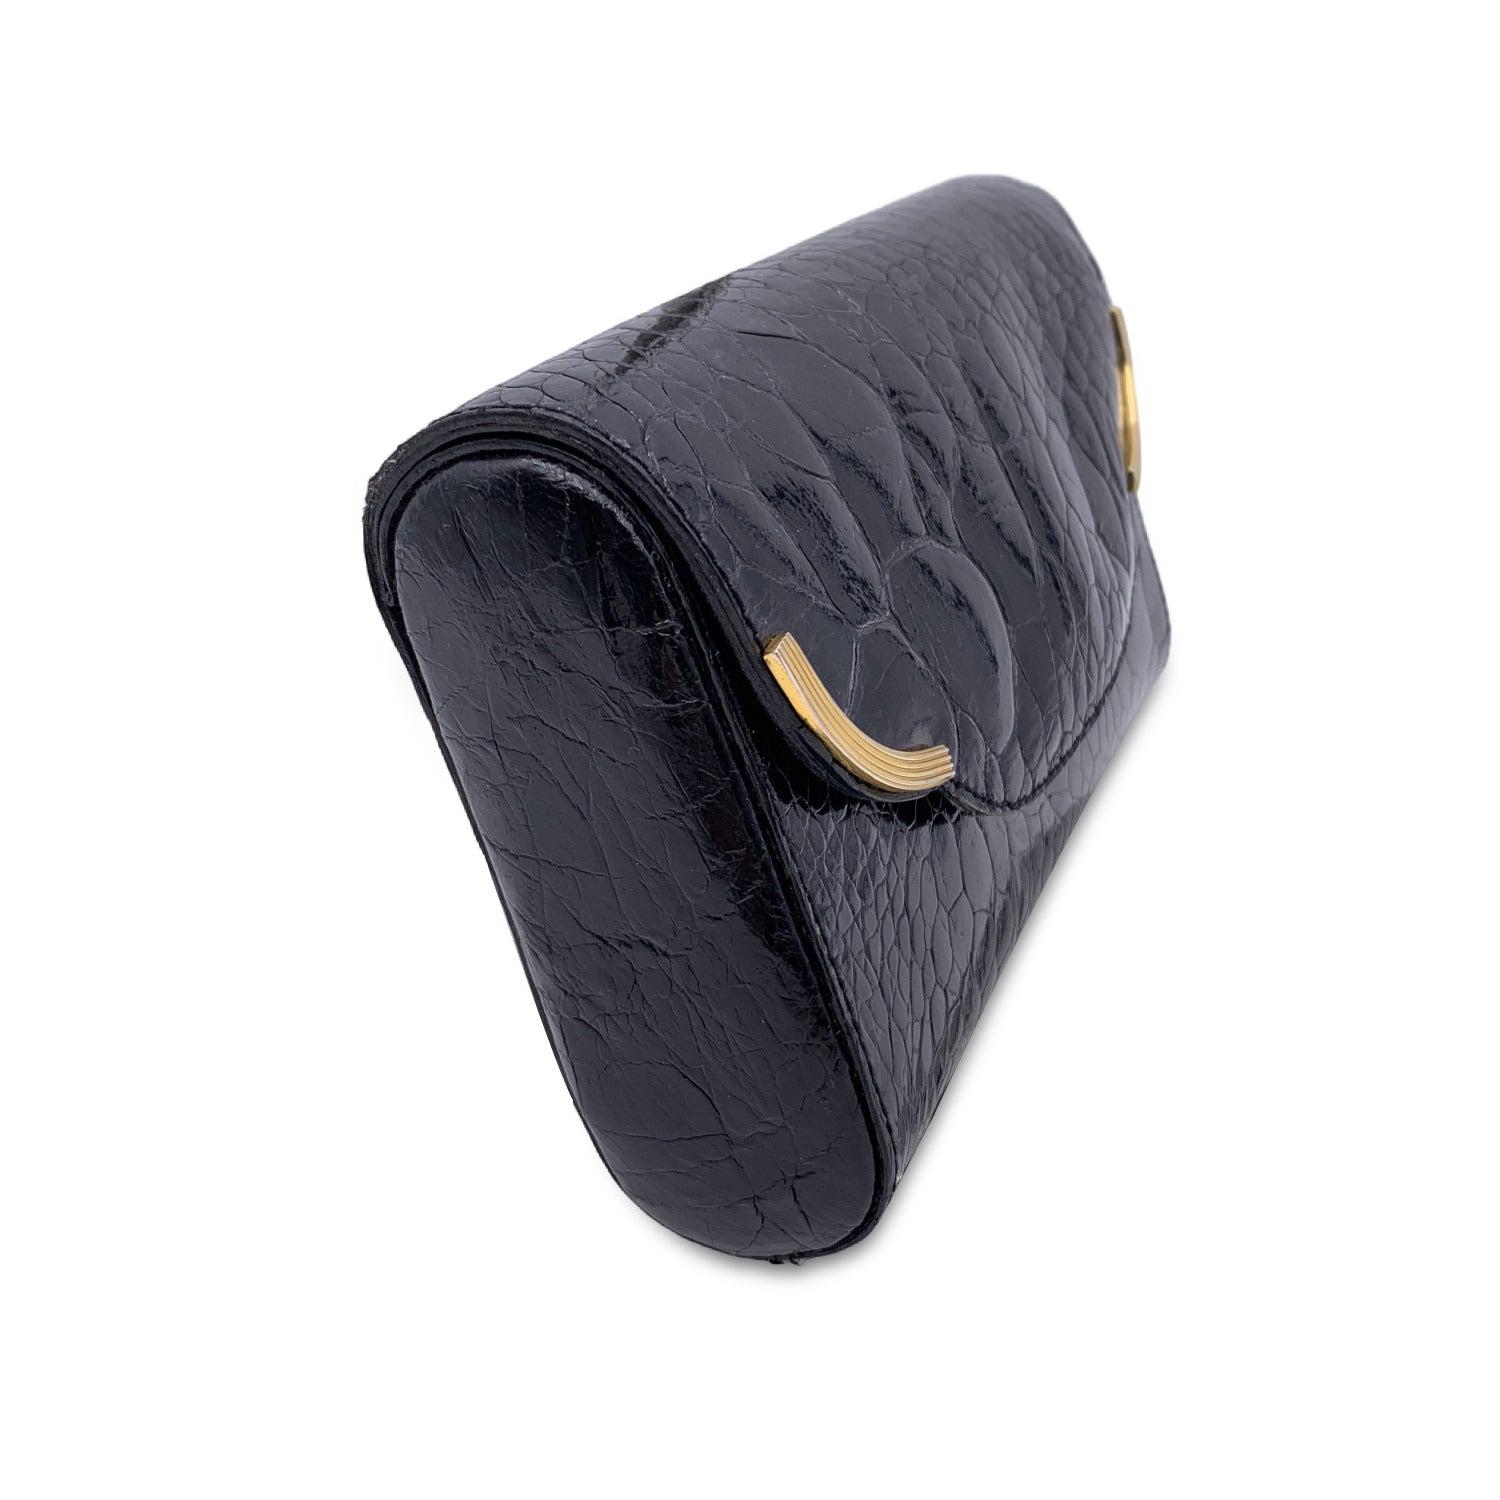 Giorgio Gucci Vintage Black Leather Clutch Bag Handbag For Sale 4